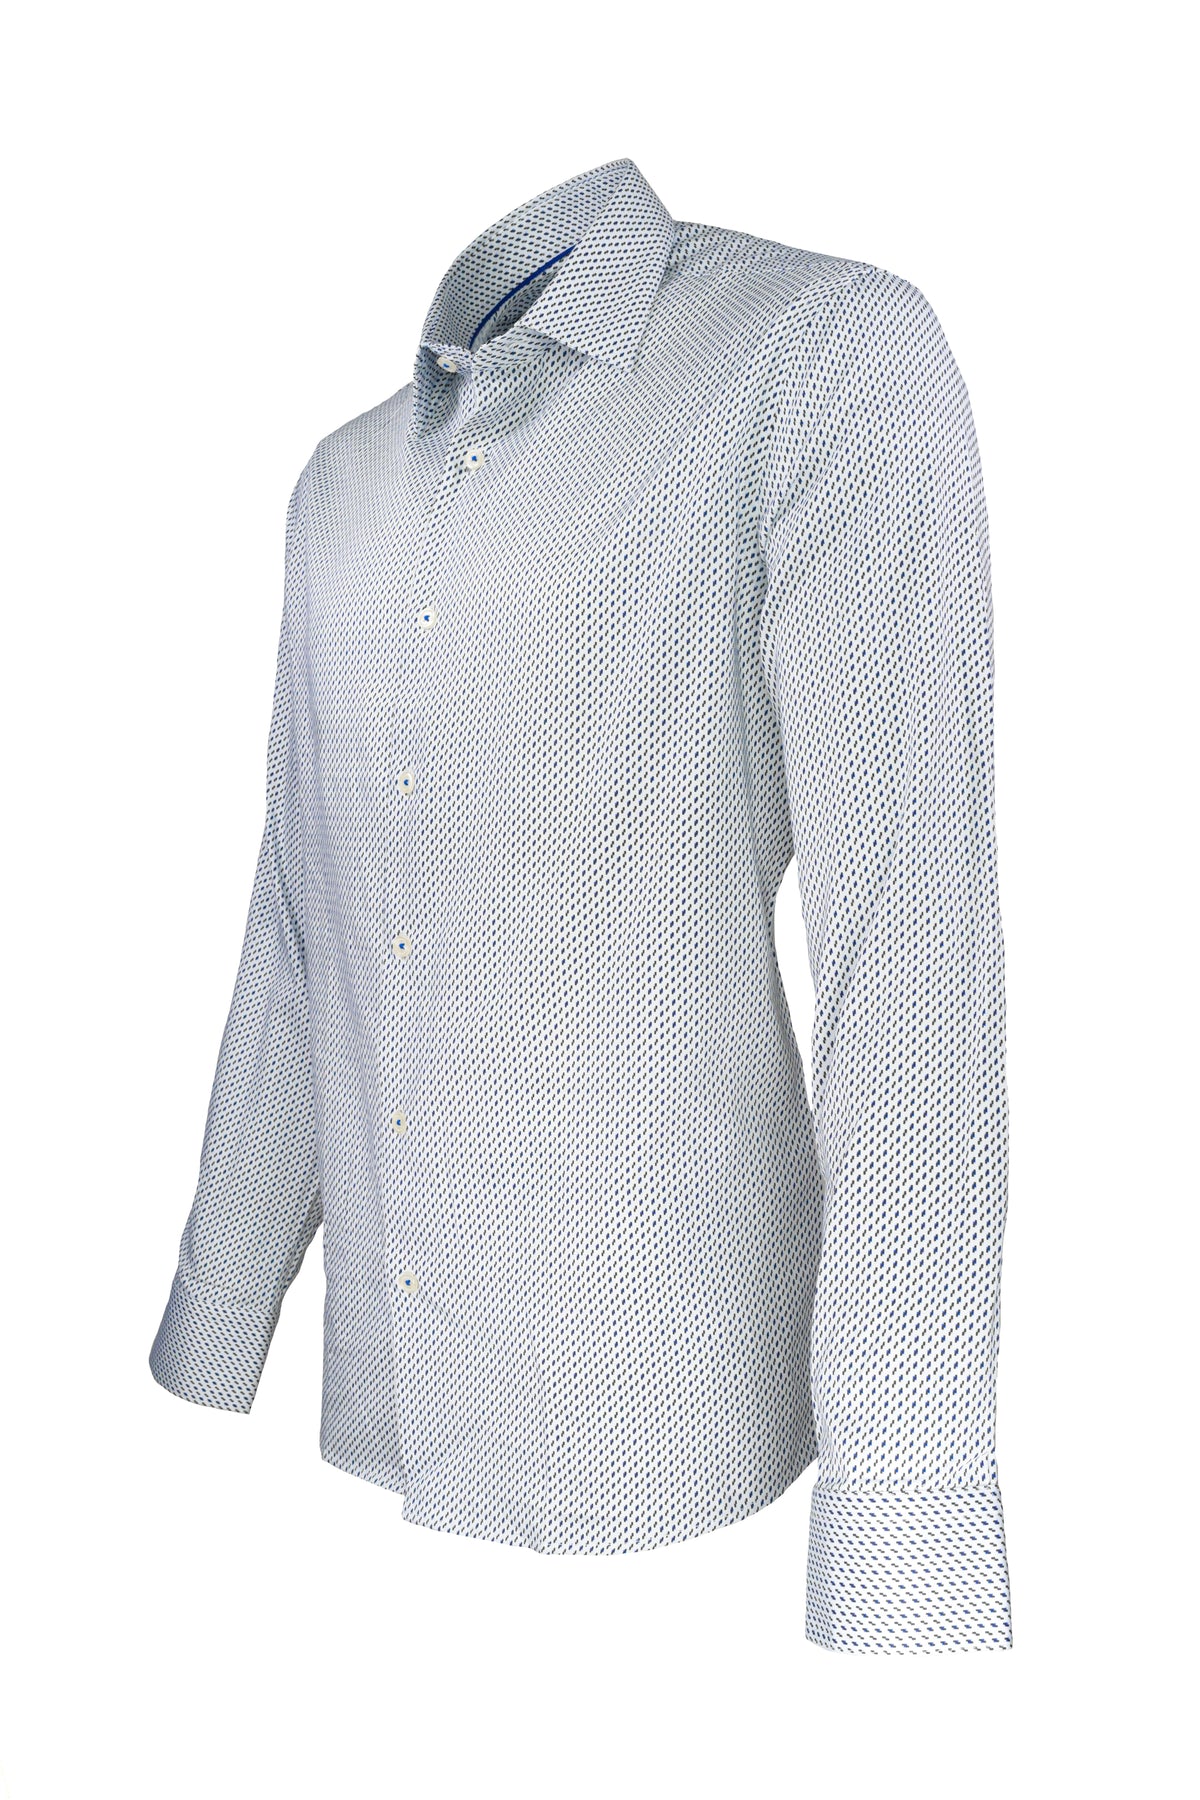 Garnet Micro Stripe Shirt White